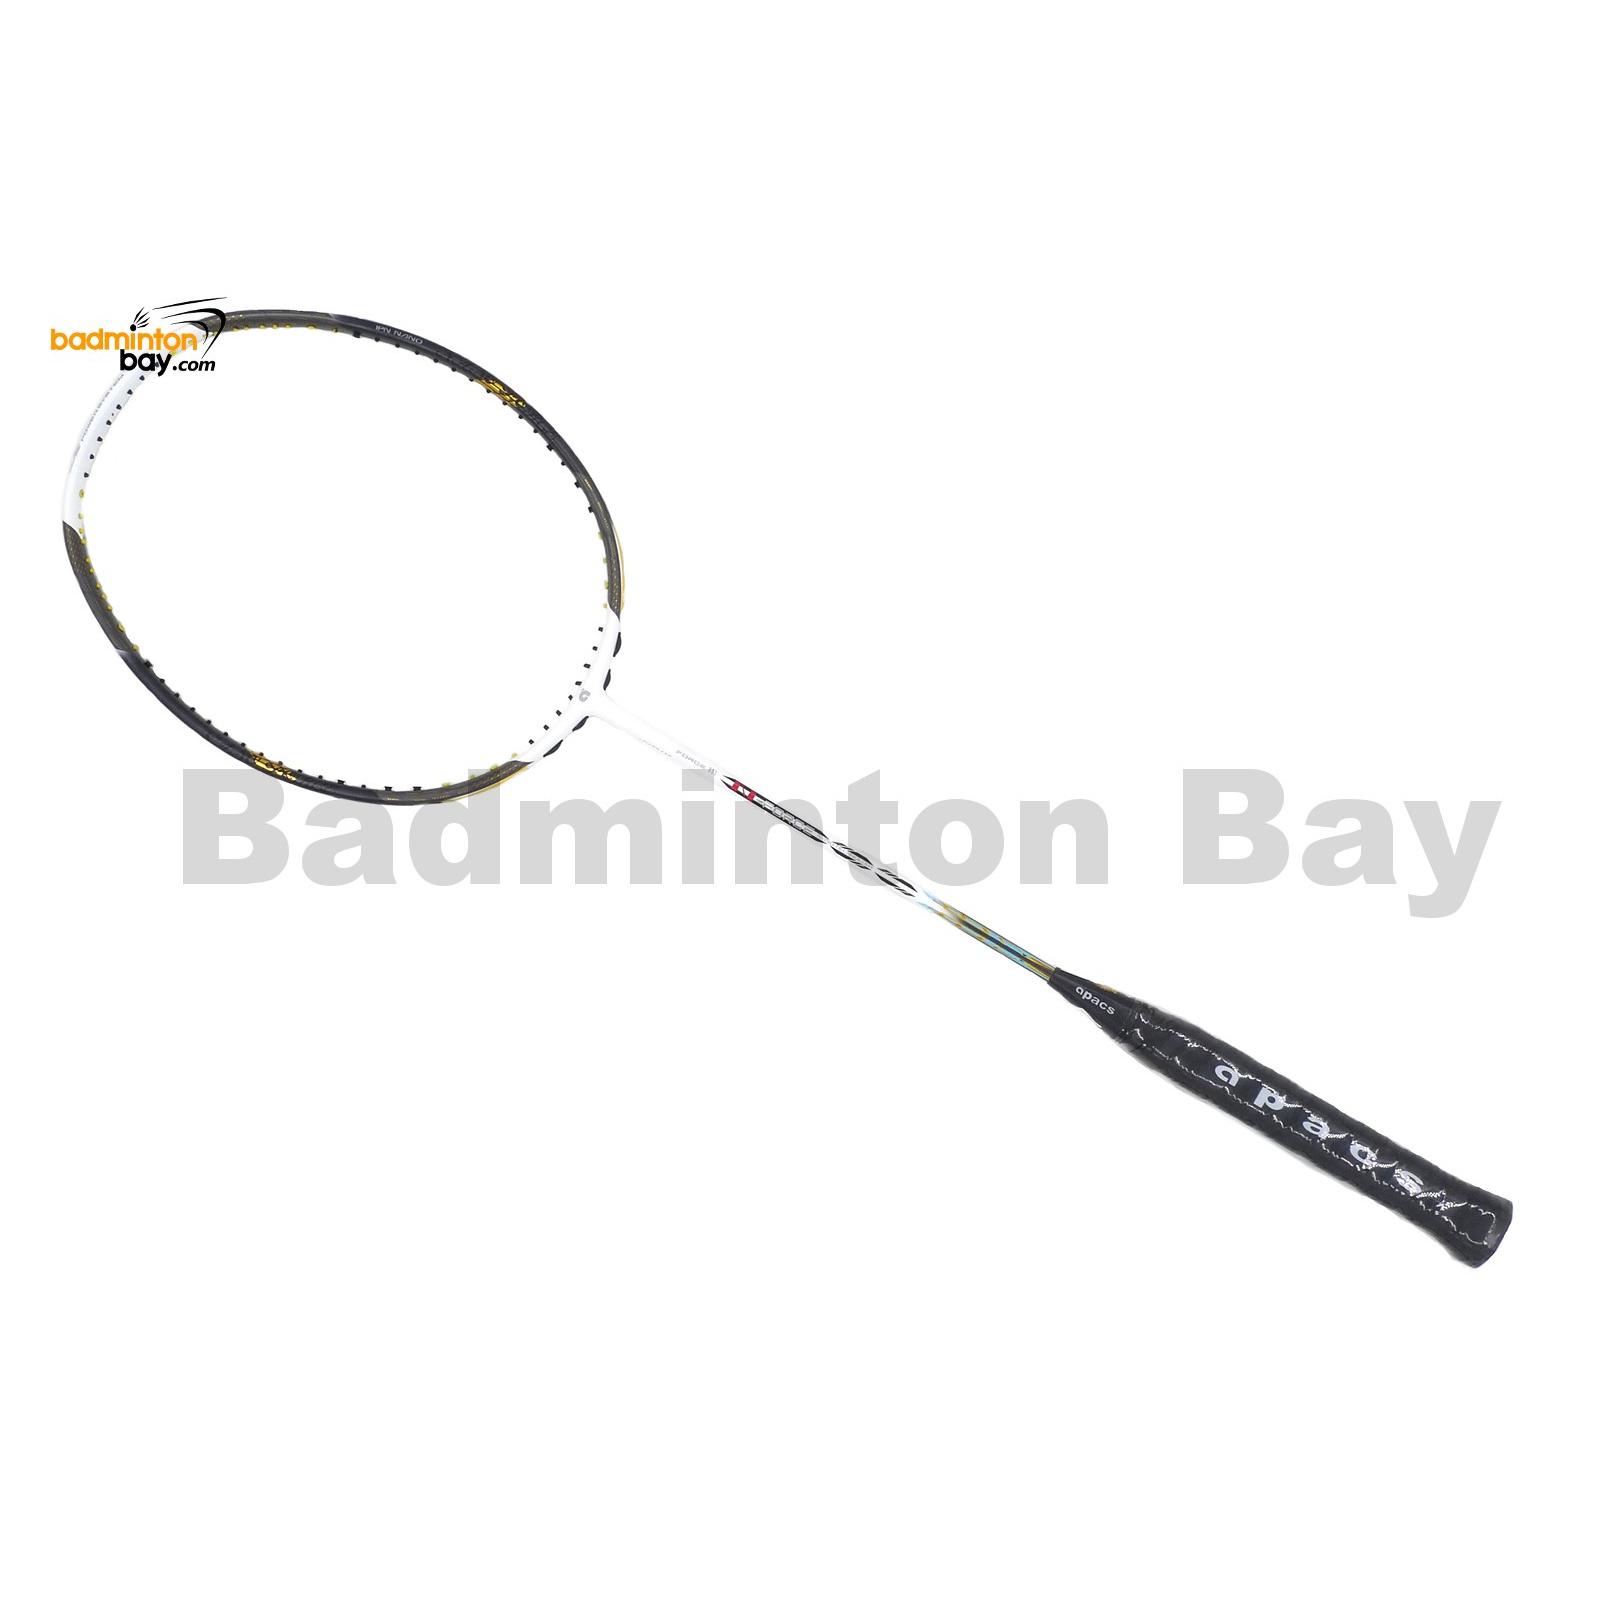 Apacs N Force III White Badminton Racket Compact Frame (4U)